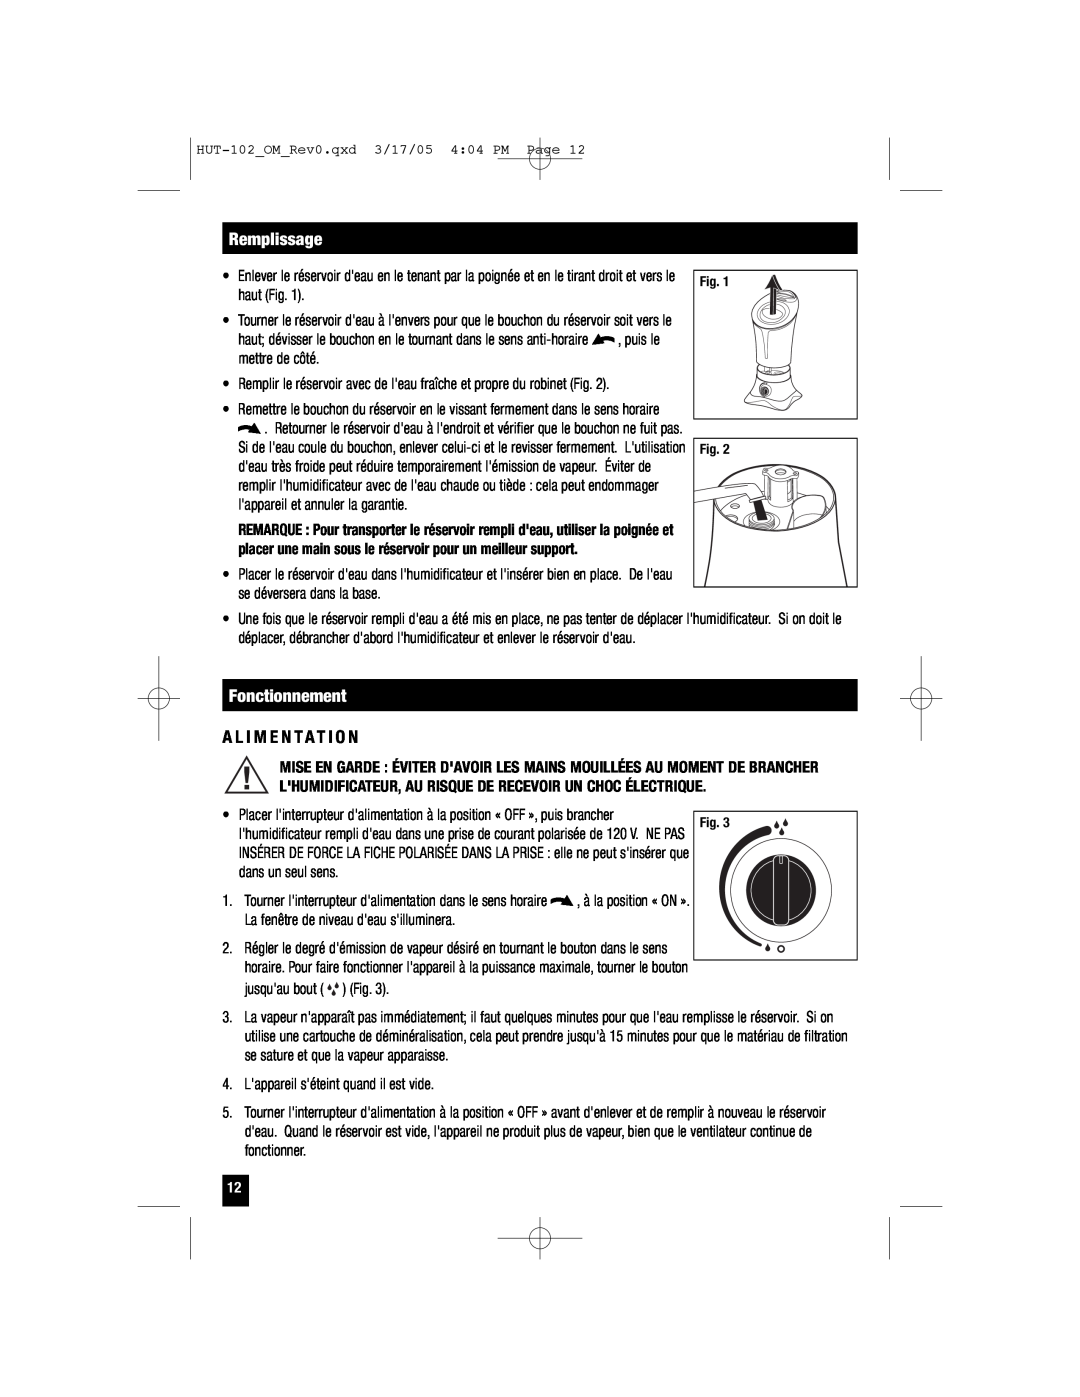 Honeywell HUT-102 important safety instructions Remplissage, Fonctionnement, A L I M E N T A T I O N 